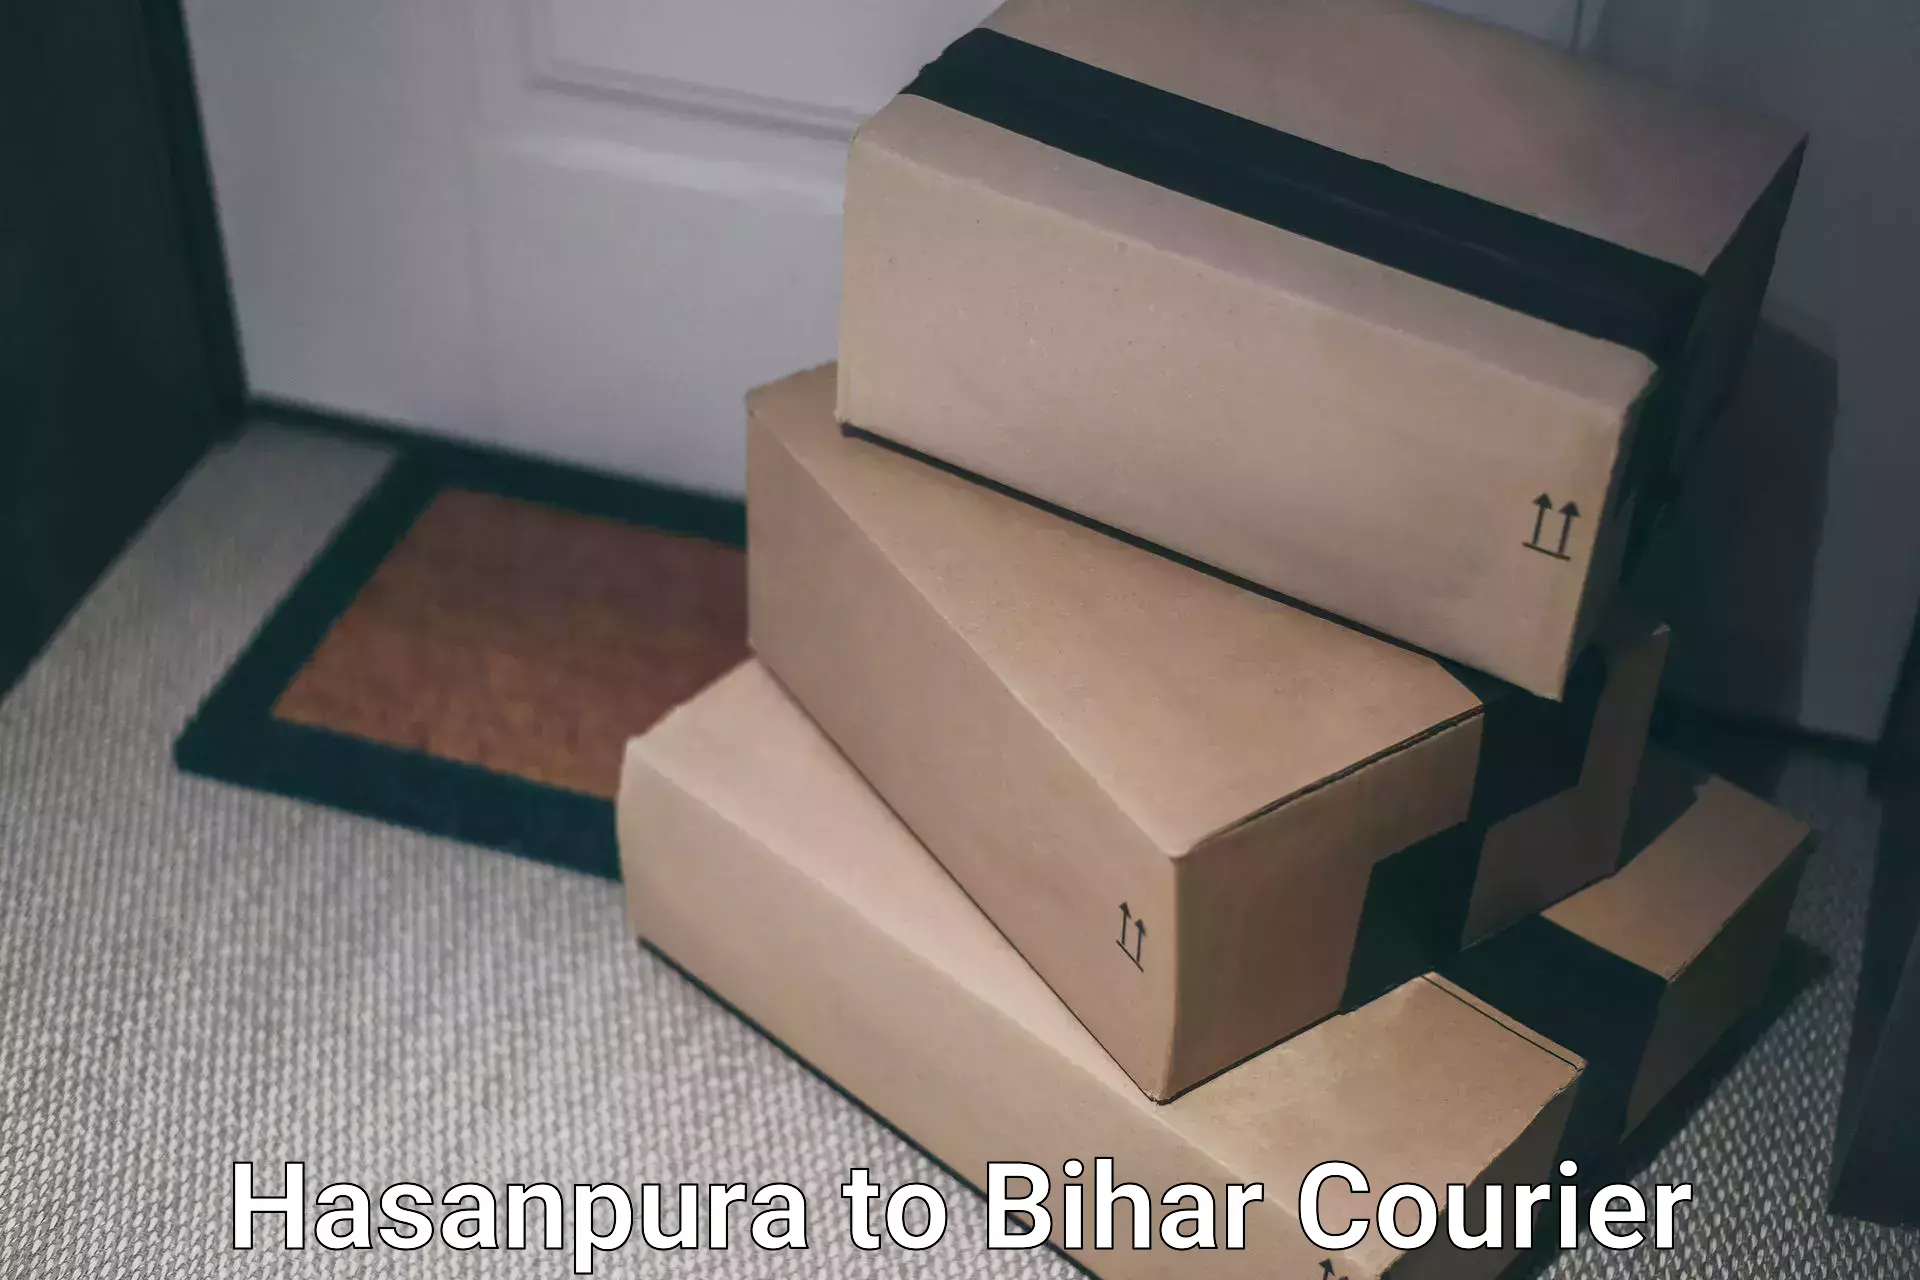 24-hour delivery options Hasanpura to Bihar